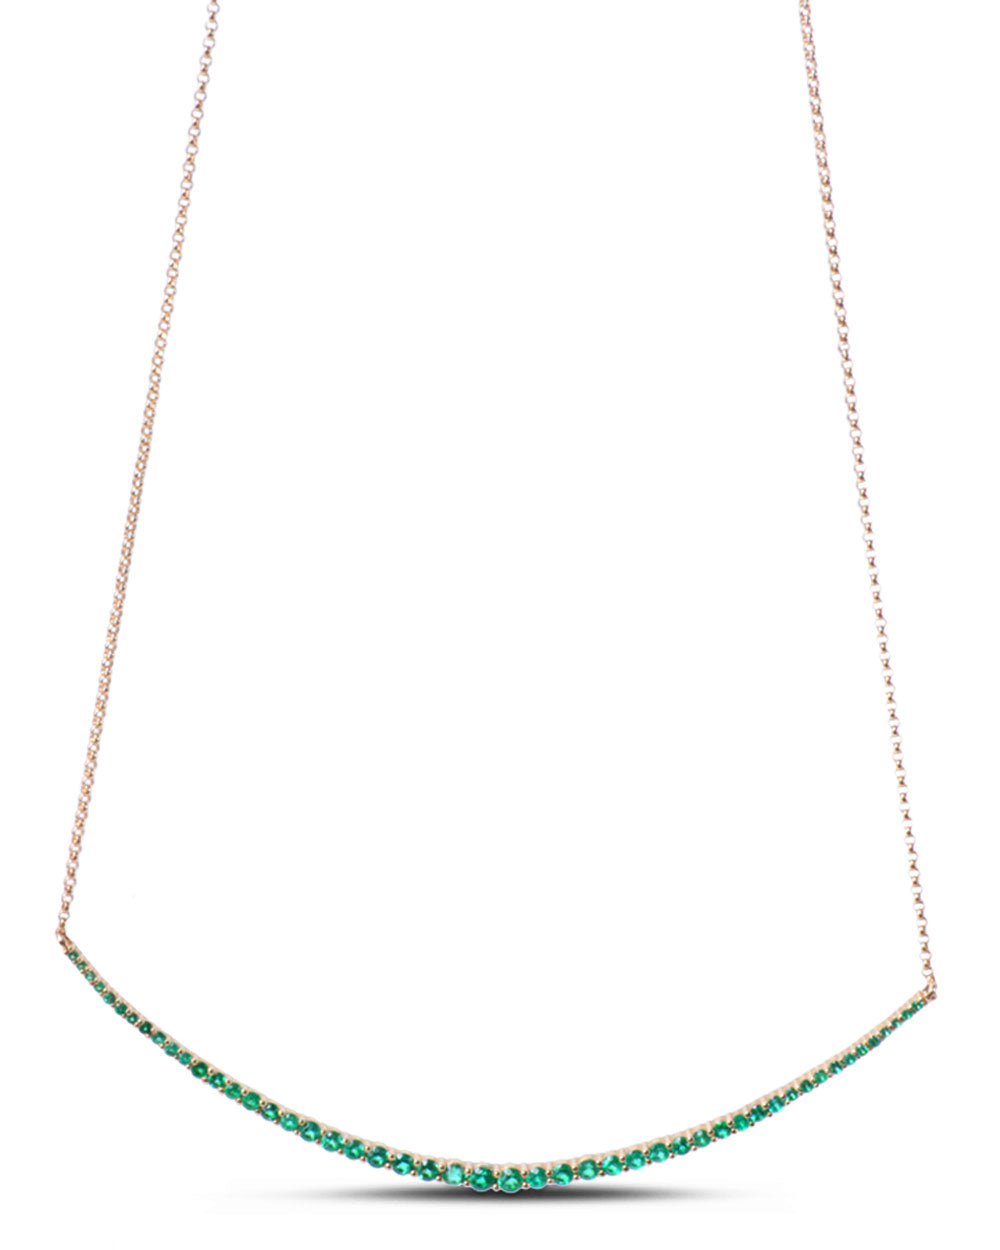 Emerald Crescent Necklace